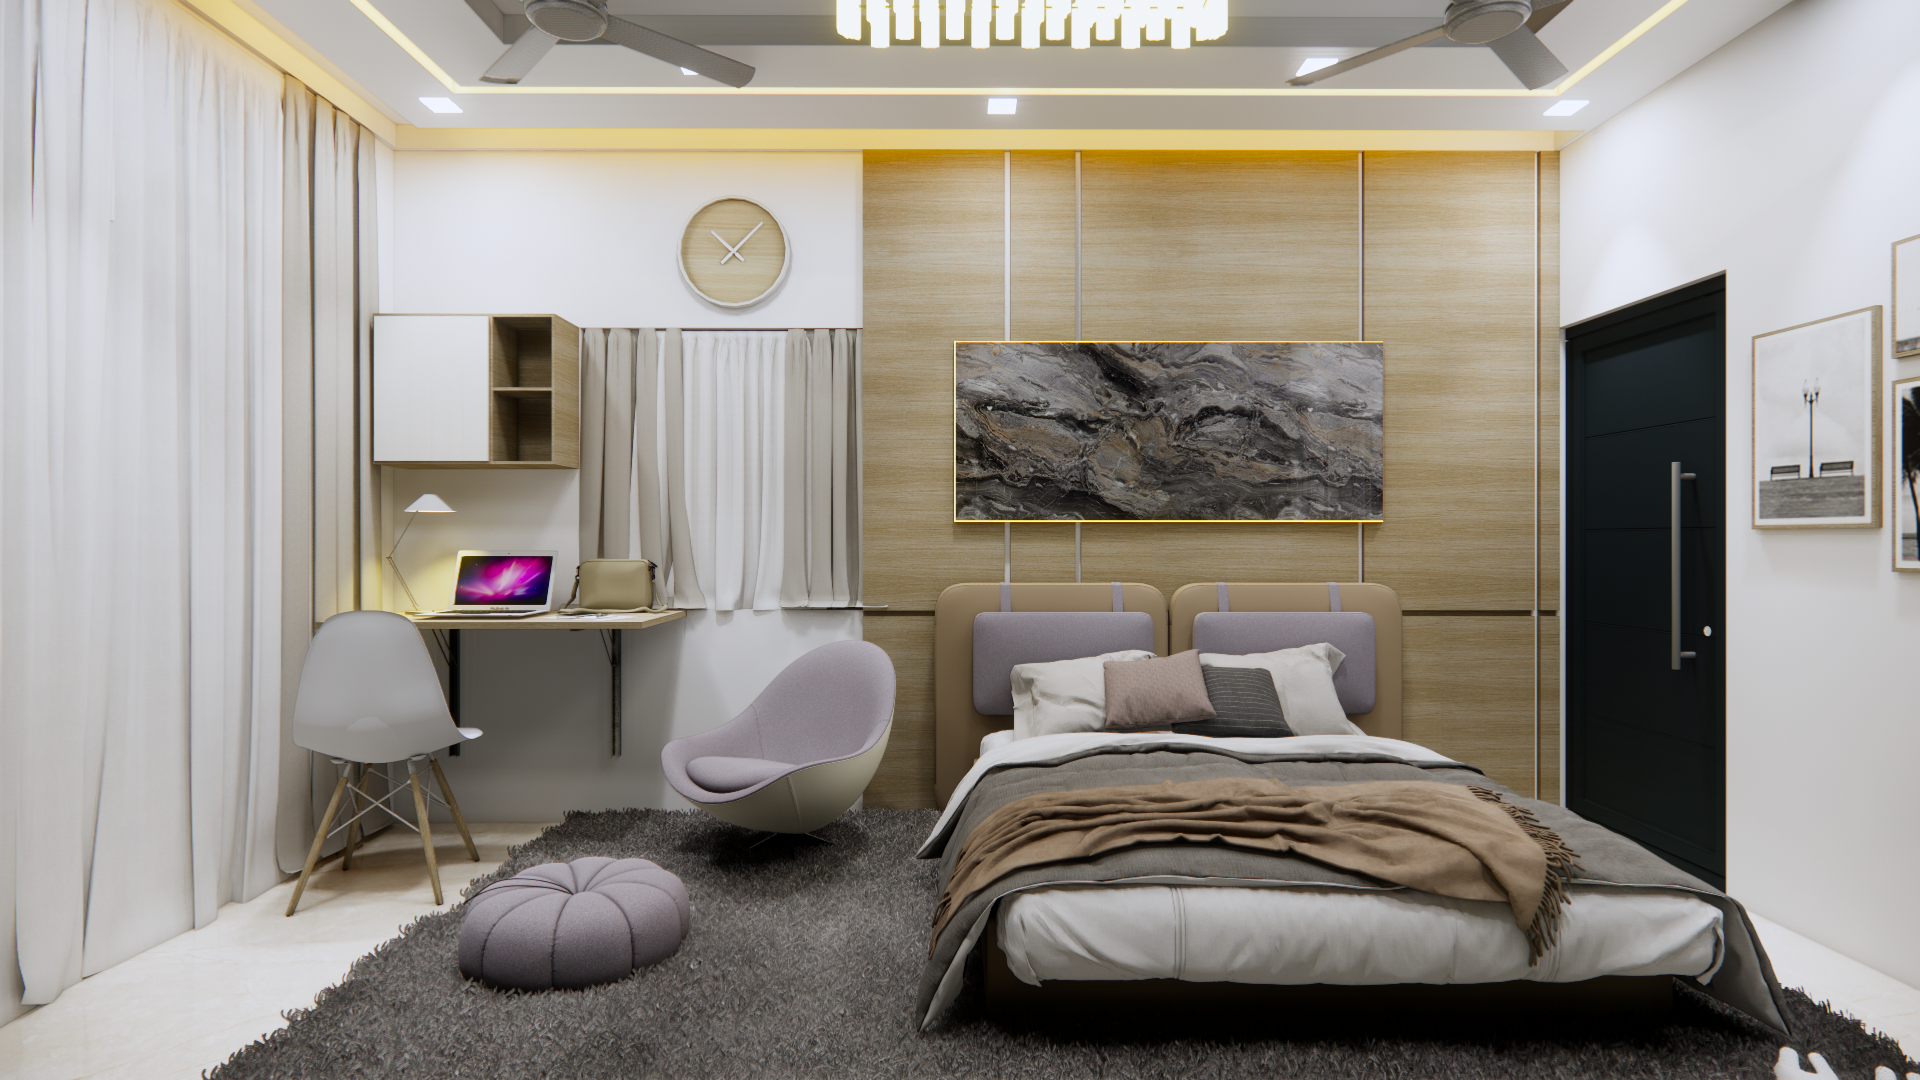 Theme based Bedroom Designs